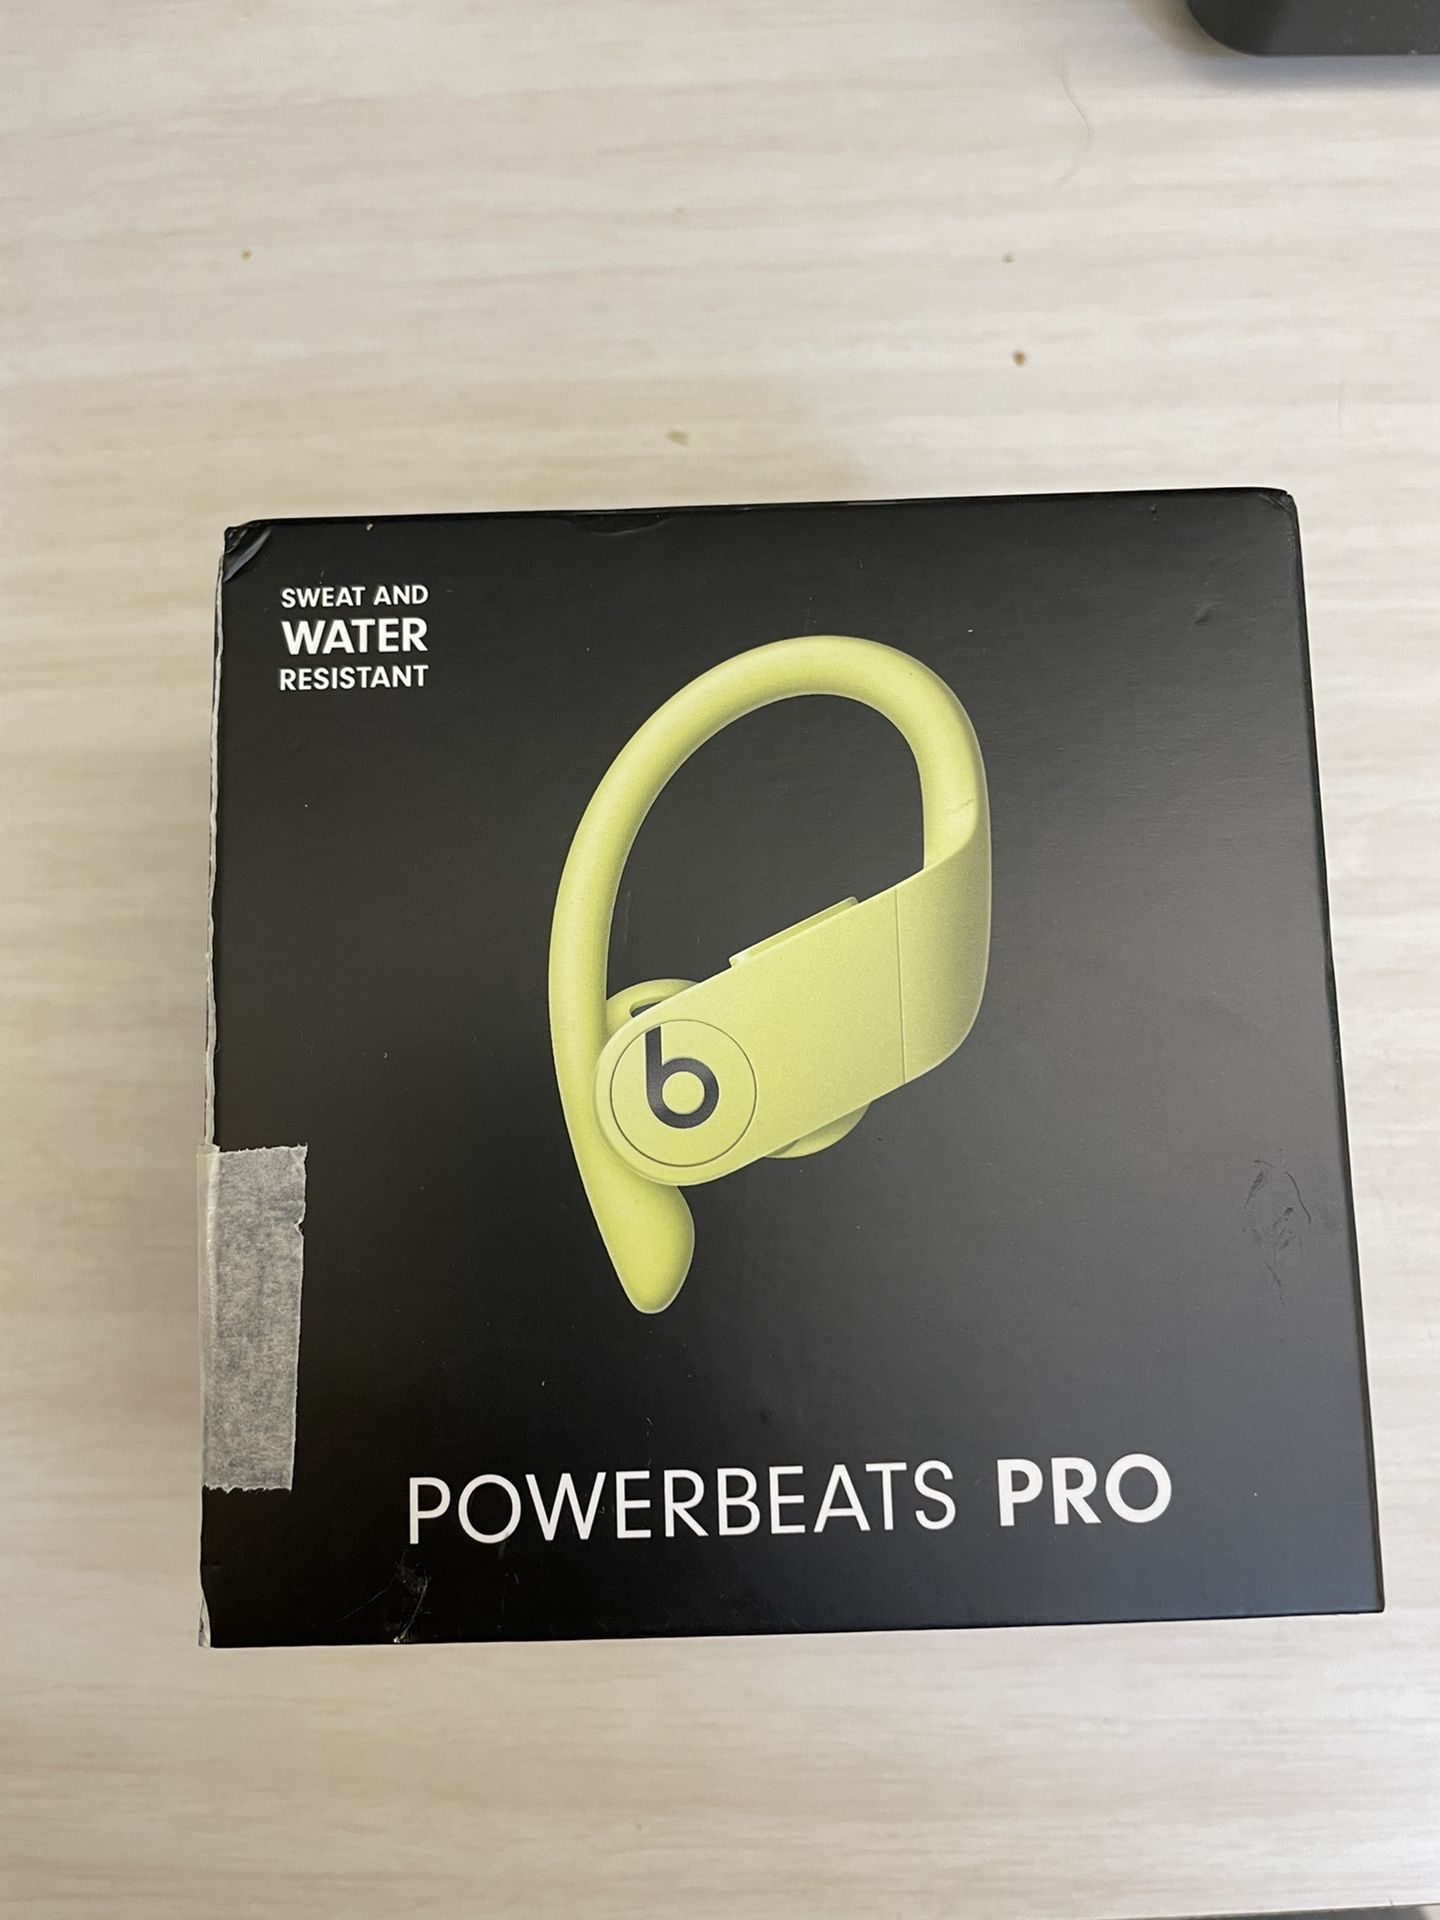 Powerbeats Pro Totally wireless Earbuds - Original/Like New